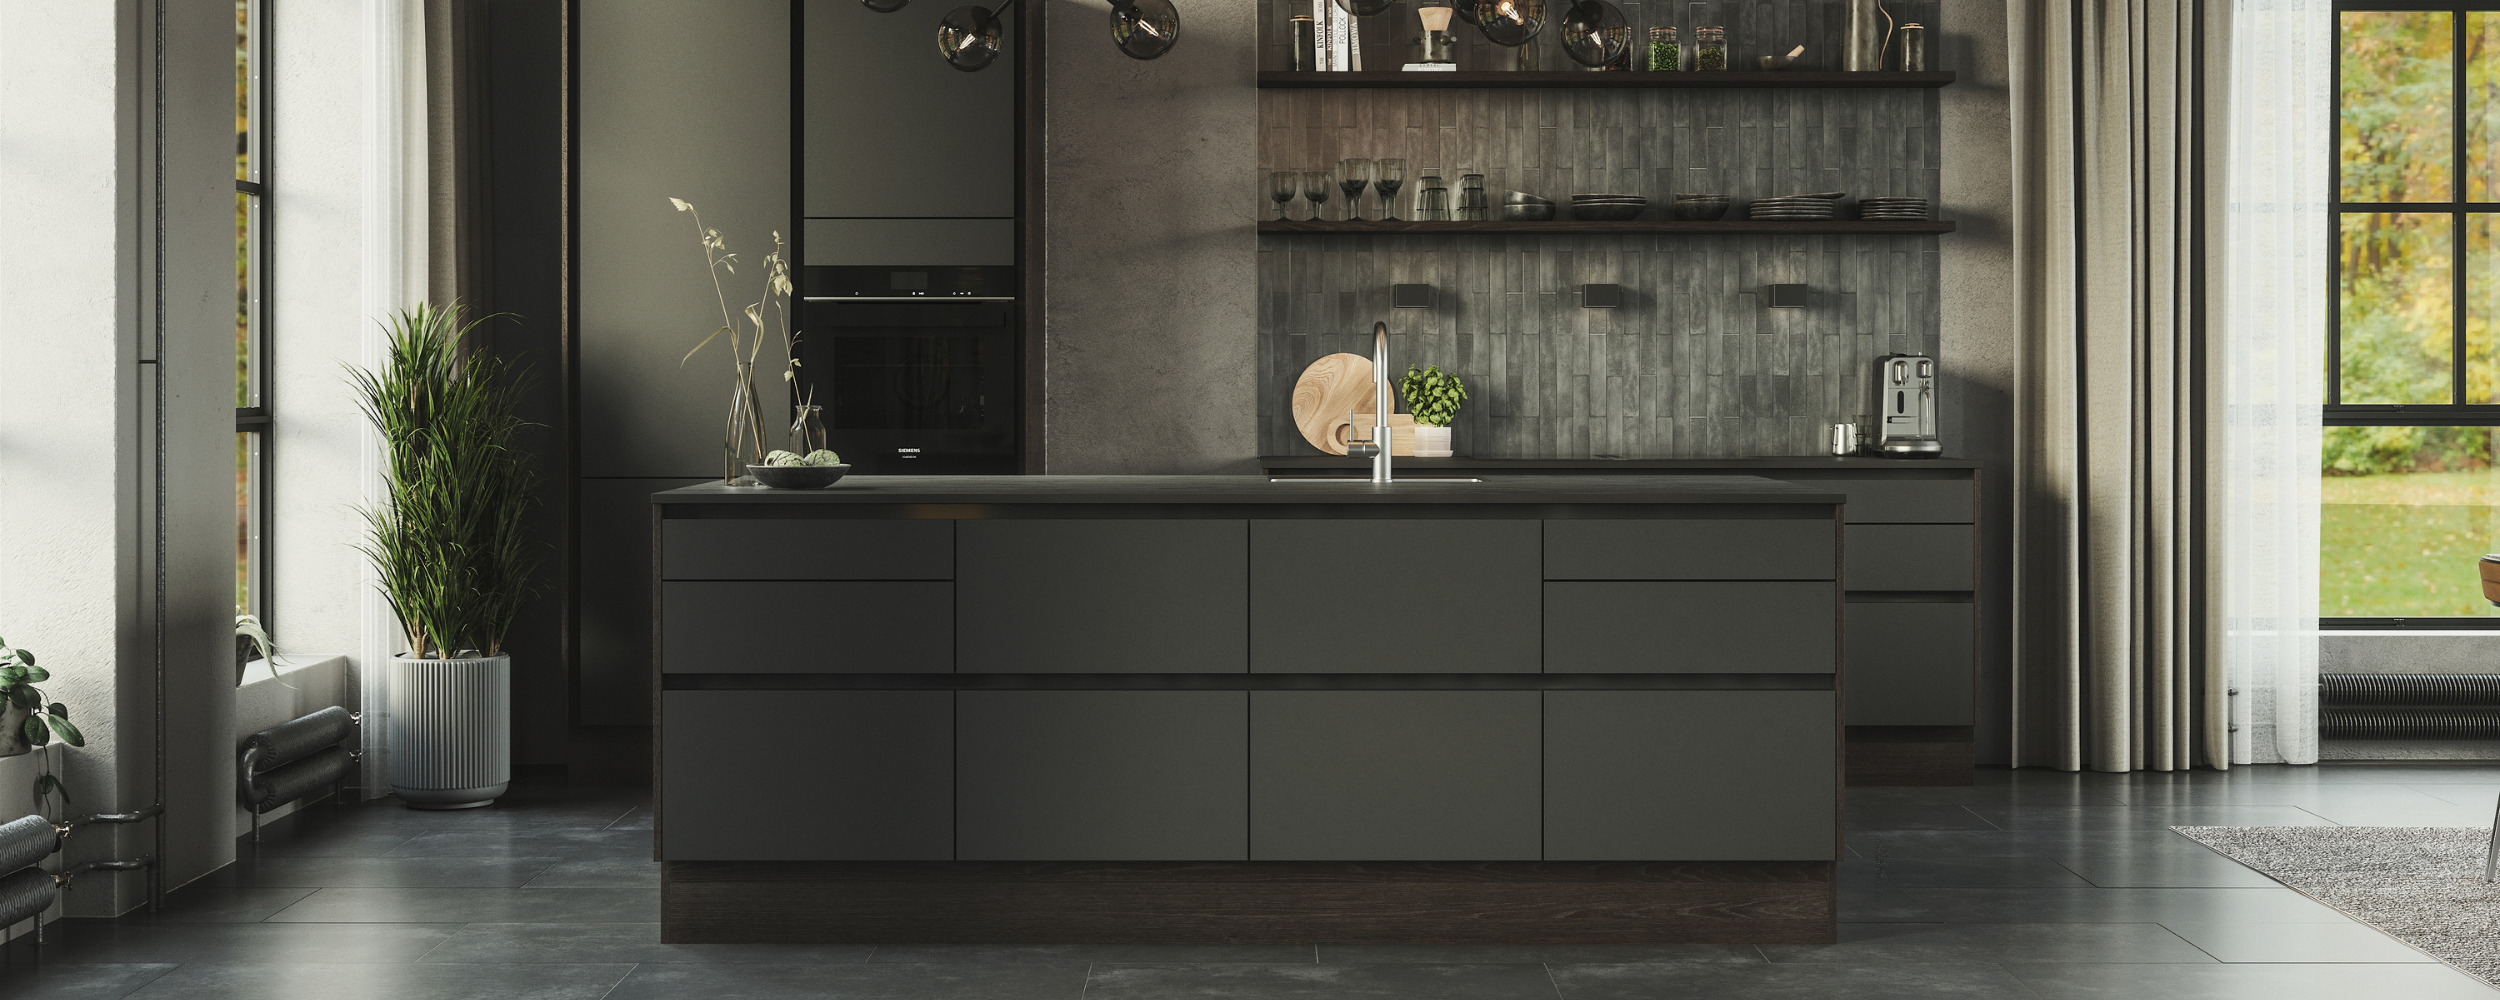 på billedet ses et sort køkken fra Designas silkkollektion med hvidevarer fra Siemens 